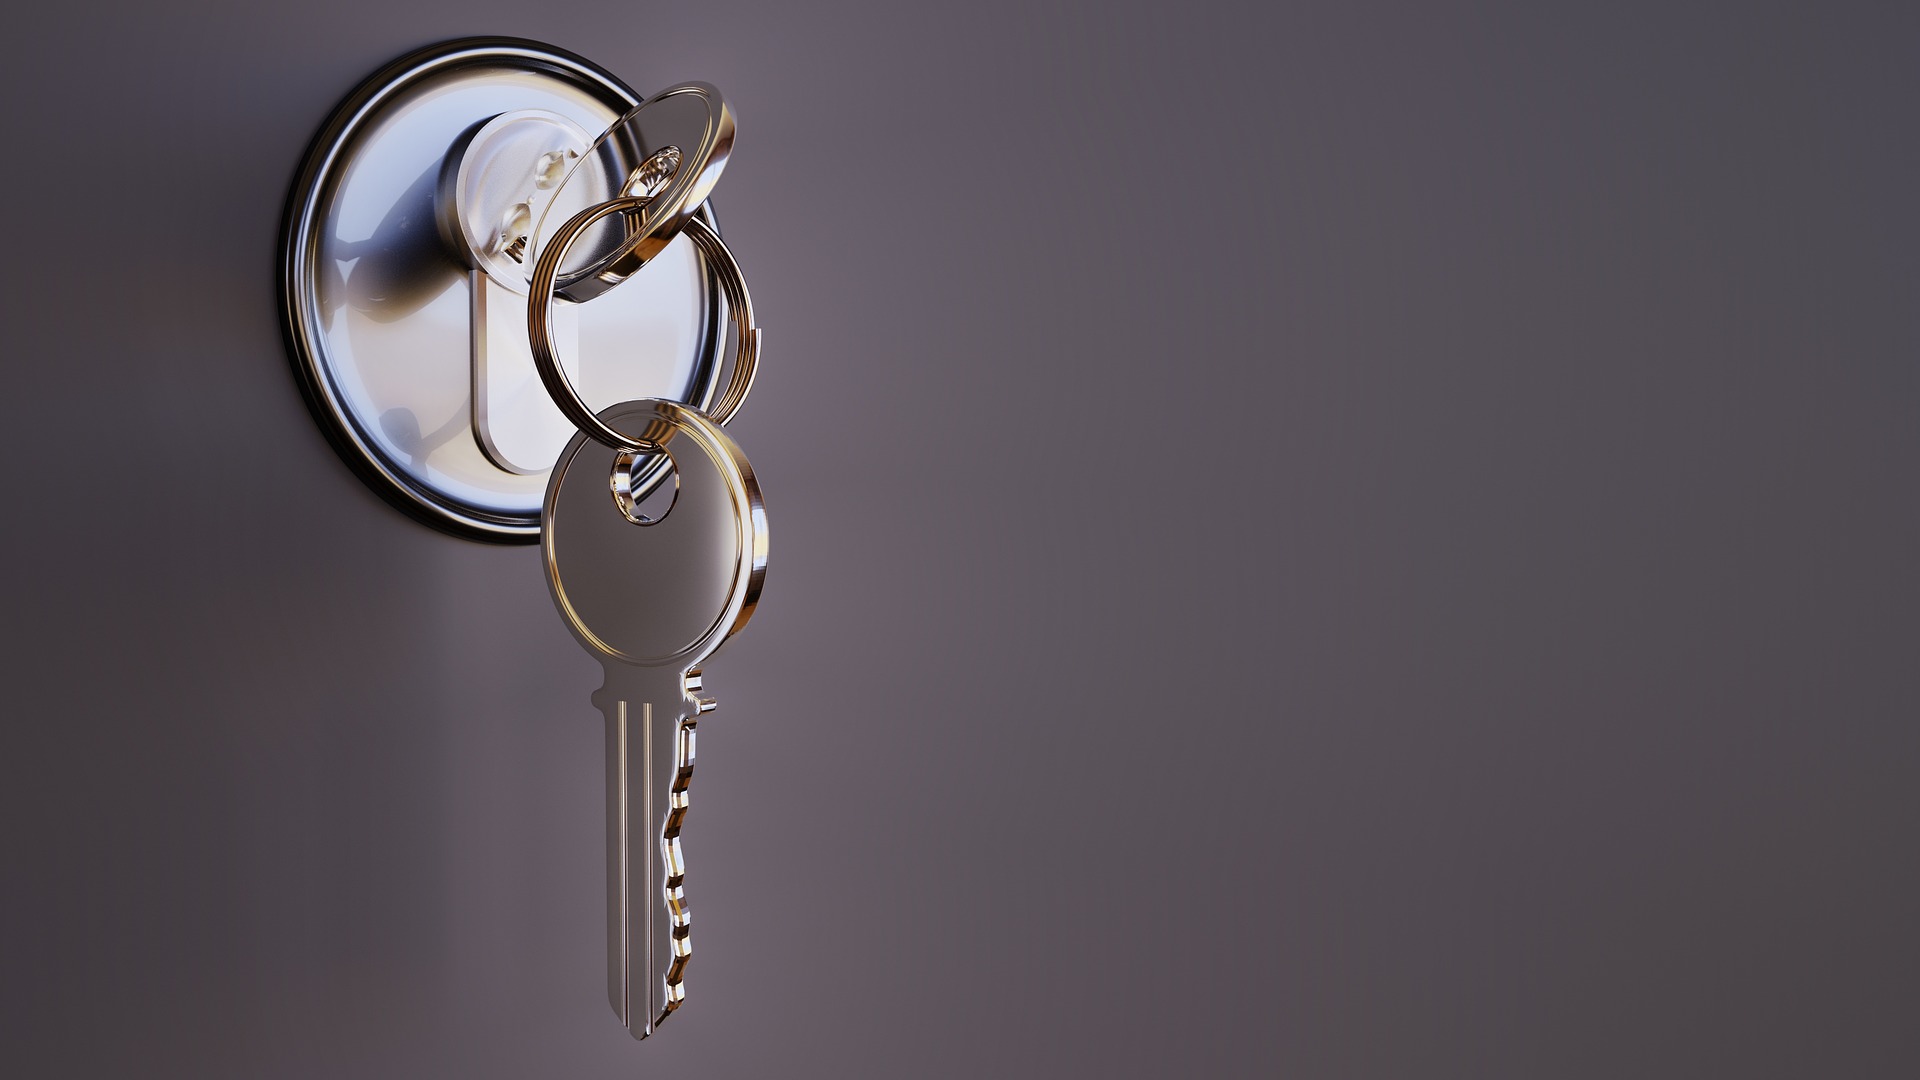 Key in lock